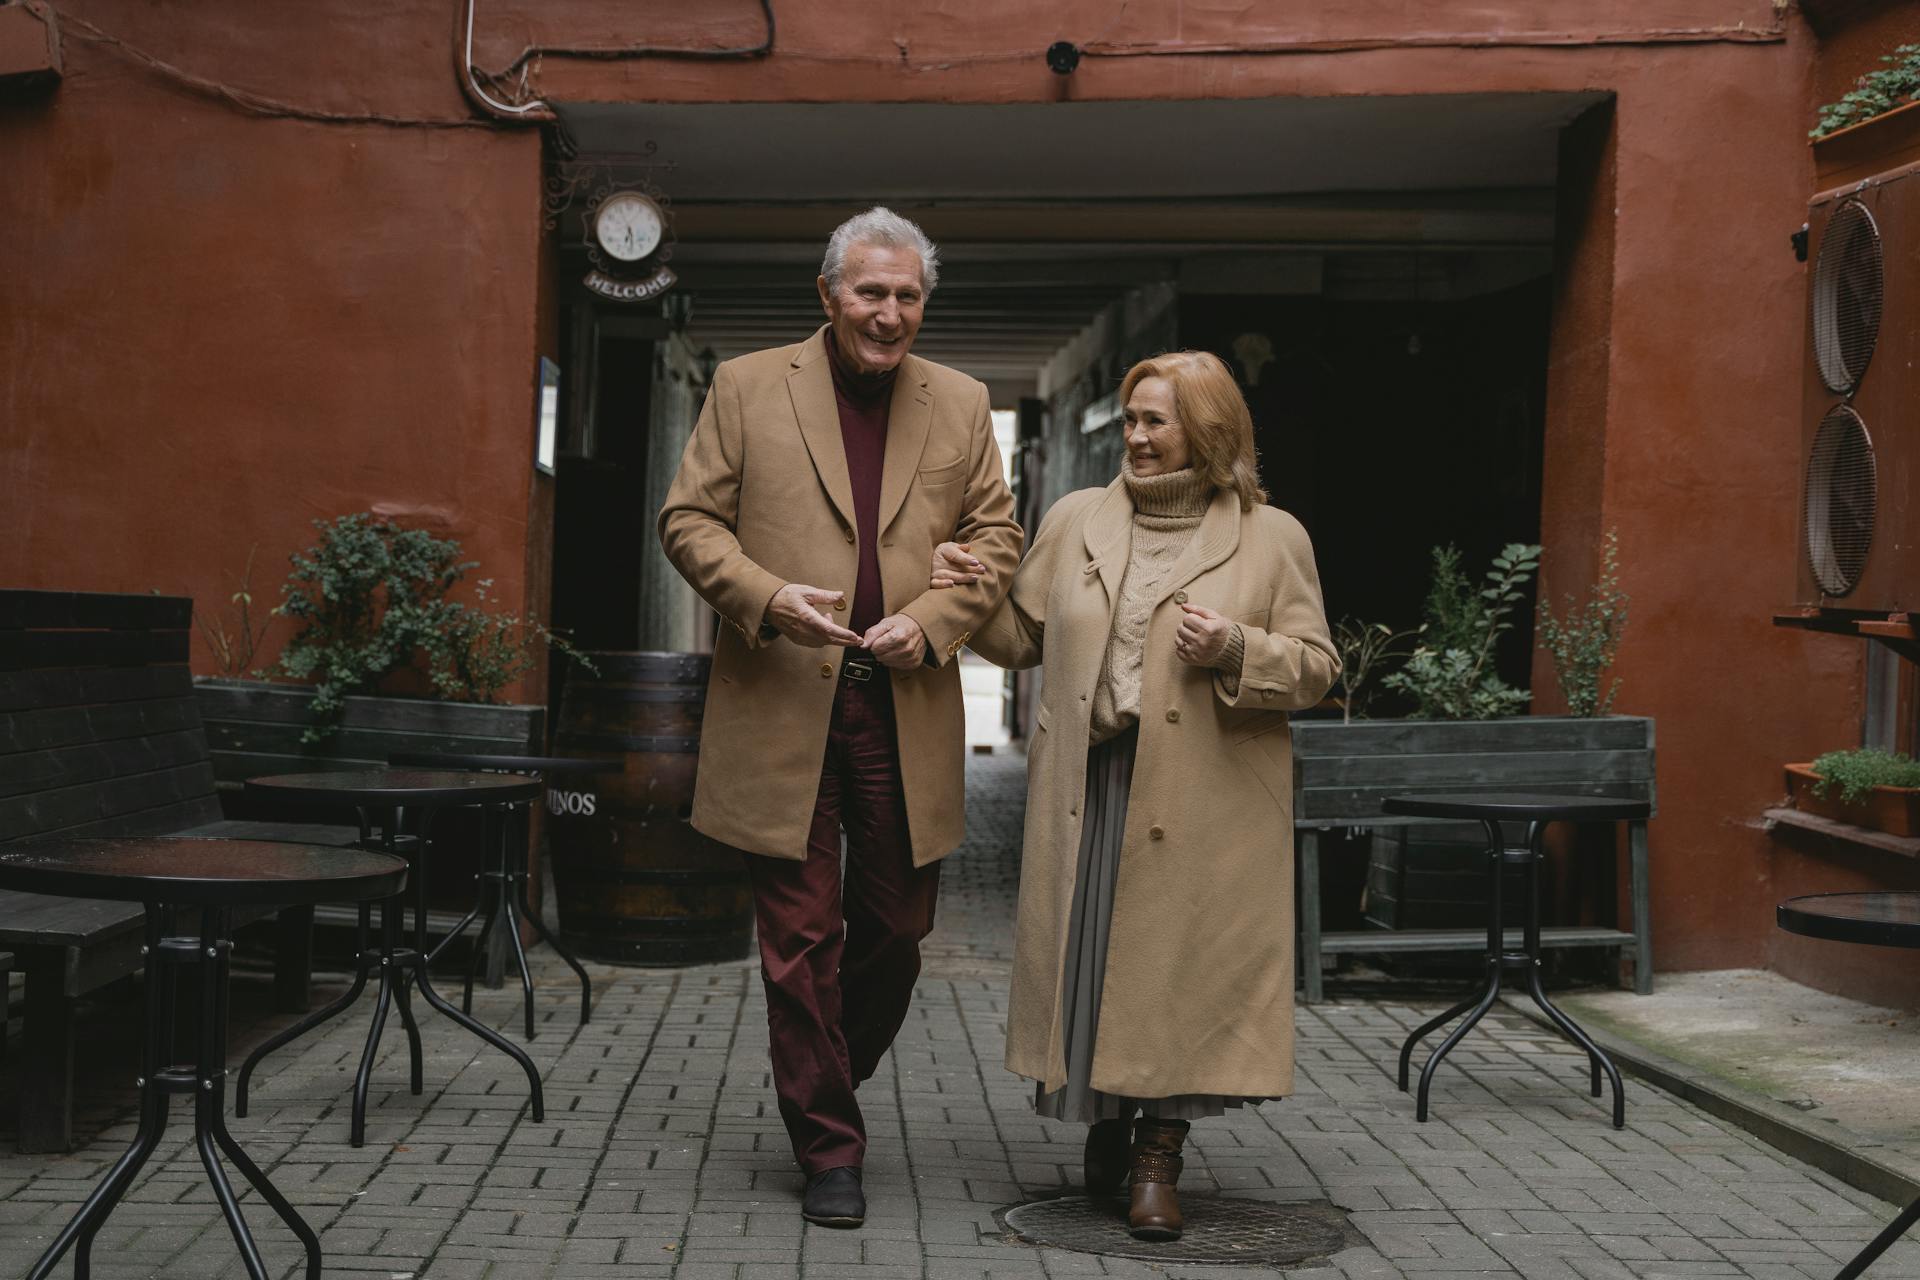 An elderly couple walking on the street | Source: Pexels